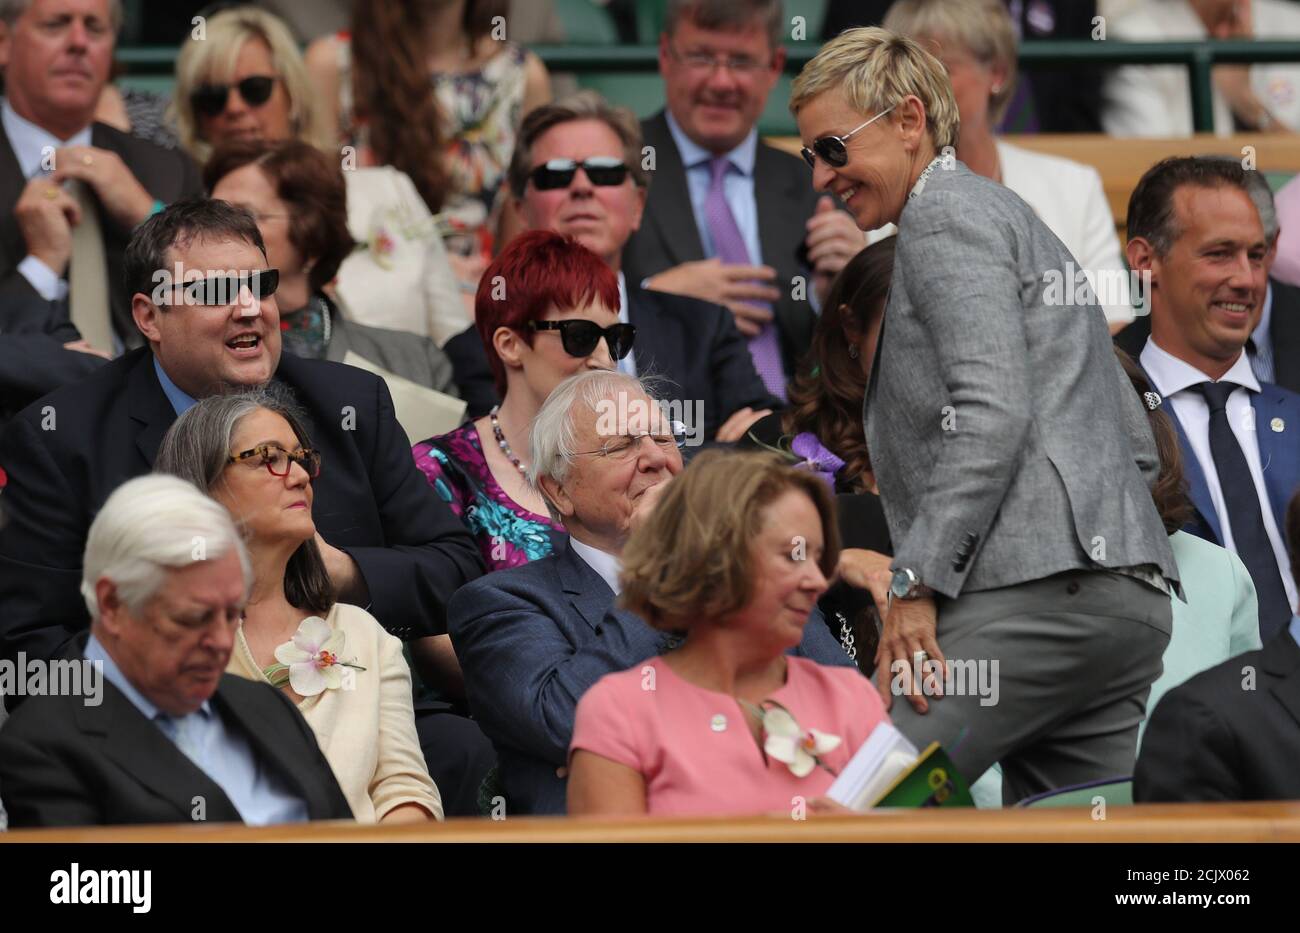 Britain Tennis - Wimbledon - All England Lawn Tennis & Croquet Club,  Wimbledon, England - 9/7/16 Comedian Peter Kay and TV presenter Ellen  DeGeneres in the royal box on centre court before